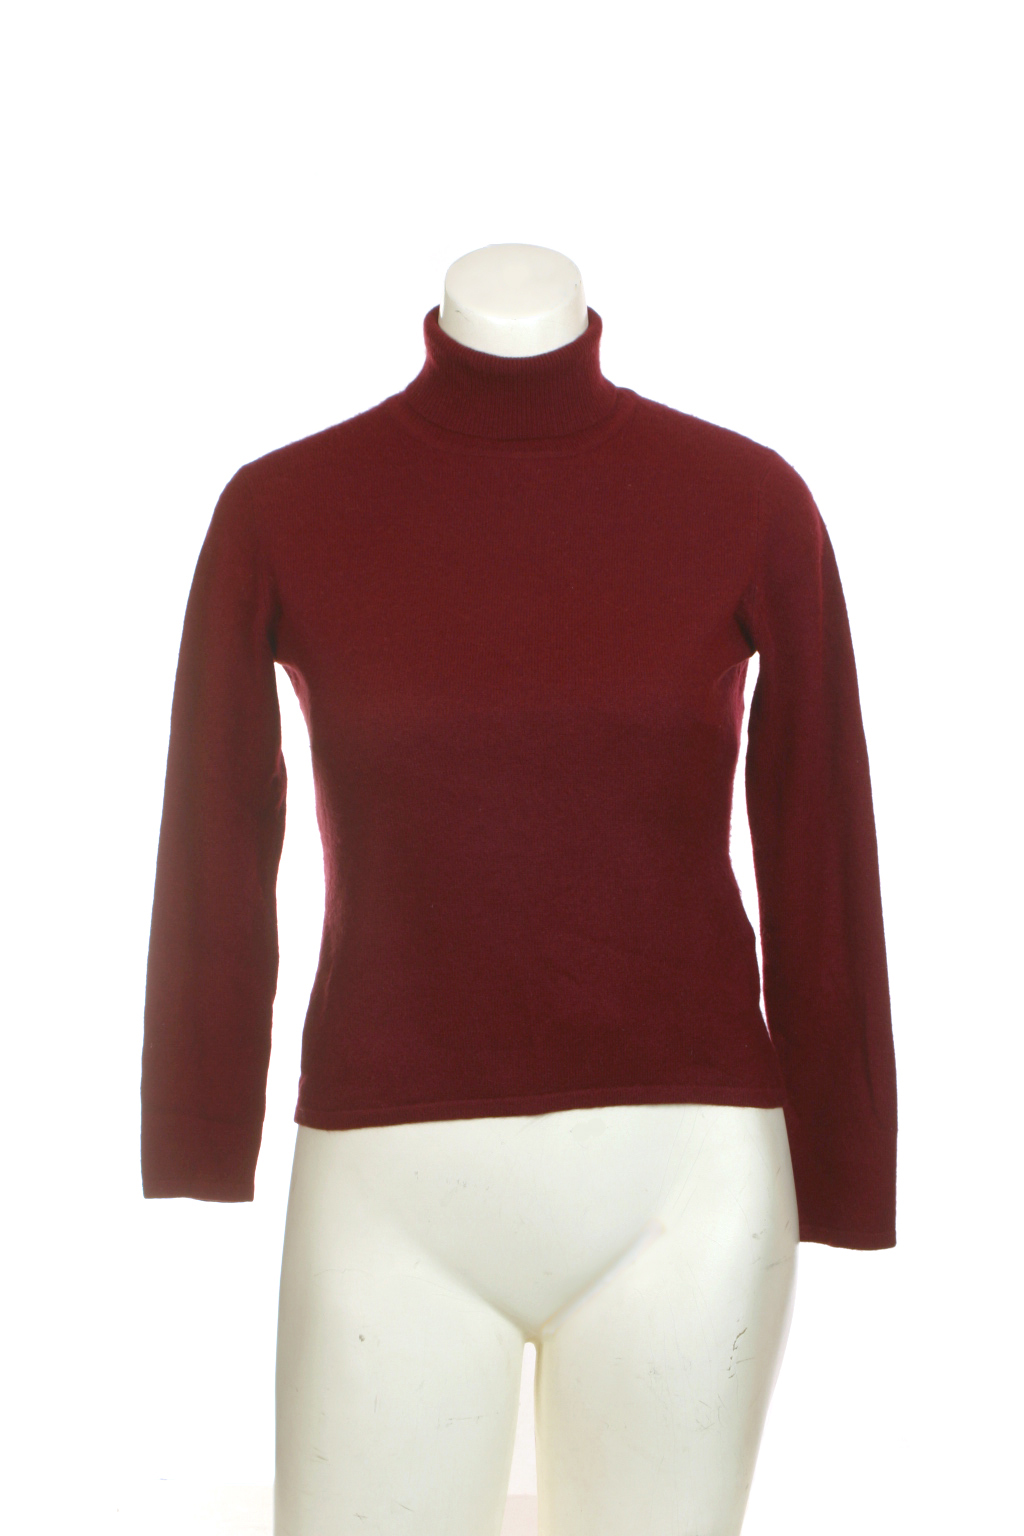 Thrift Shop Sweater Second Hand JaxSport Cashmere Petite S Burgundy Turtleneck